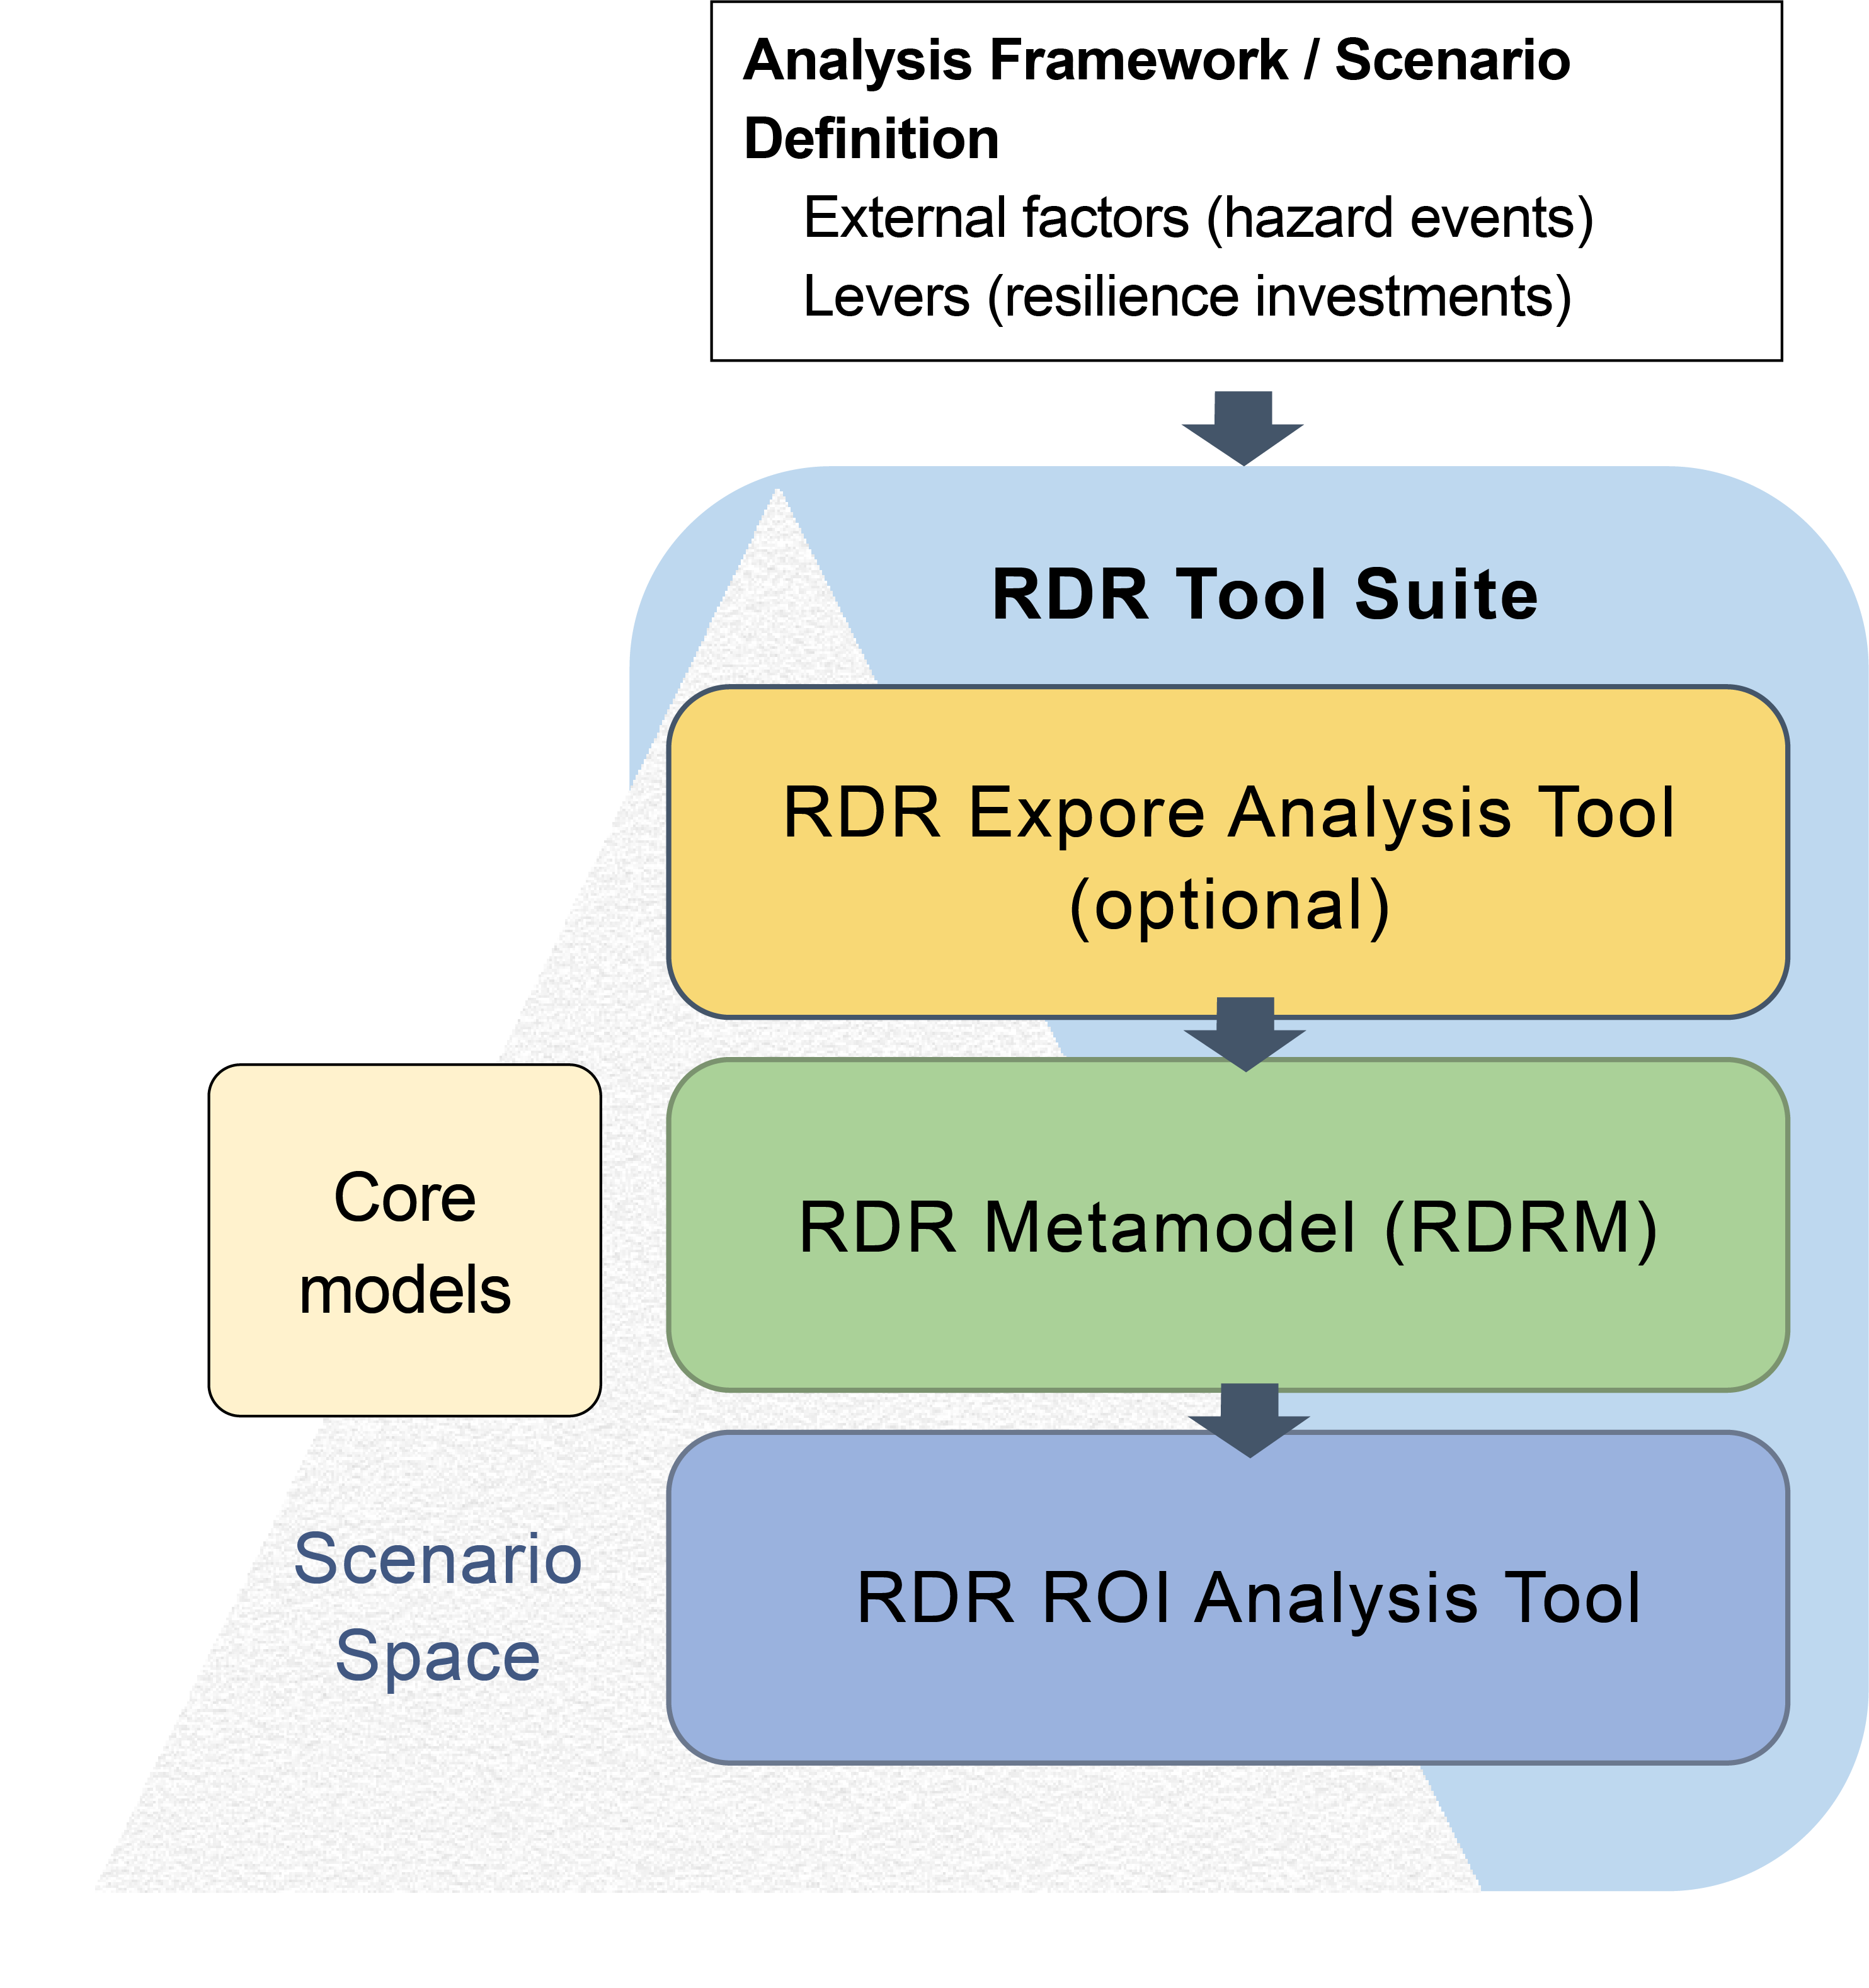 Figure 1.2-1 USDOT RDR Tool Suite